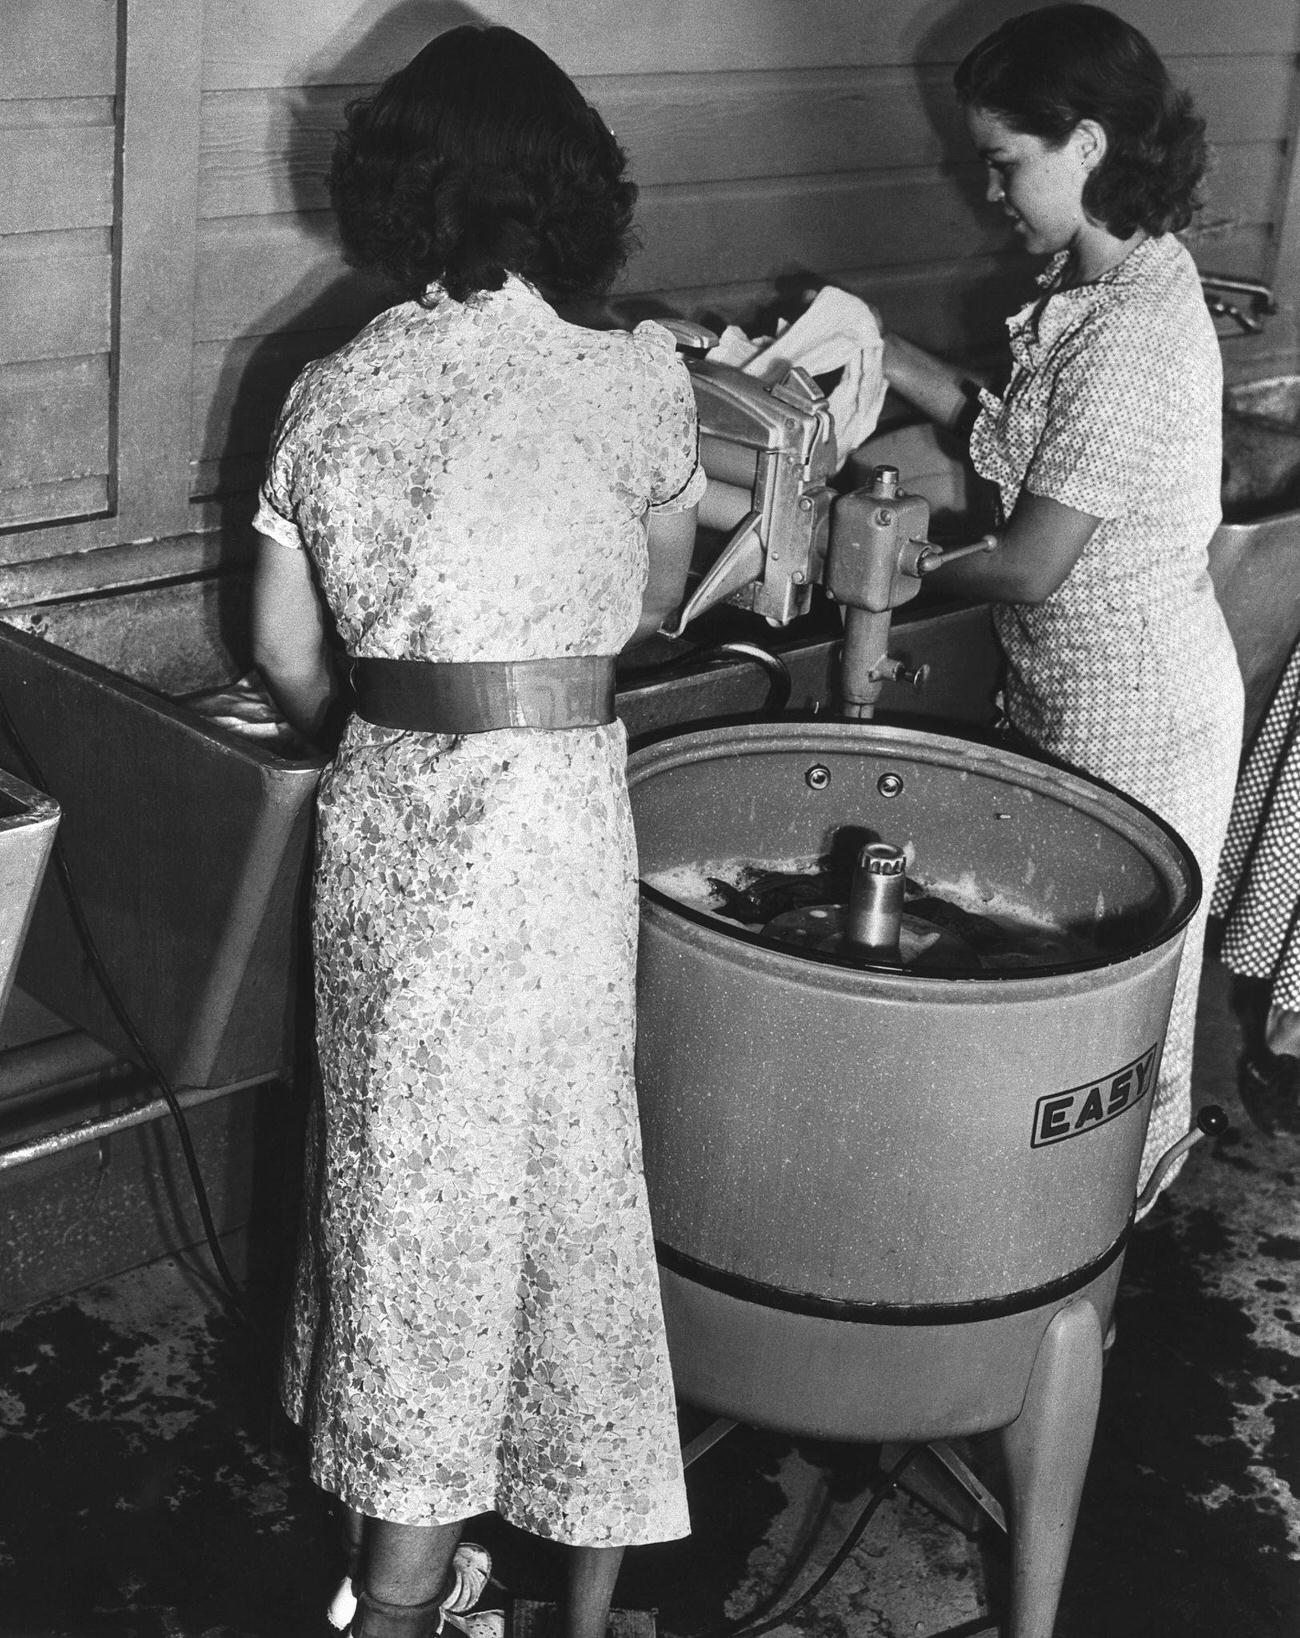 Girls using a wringer at a washing machine.